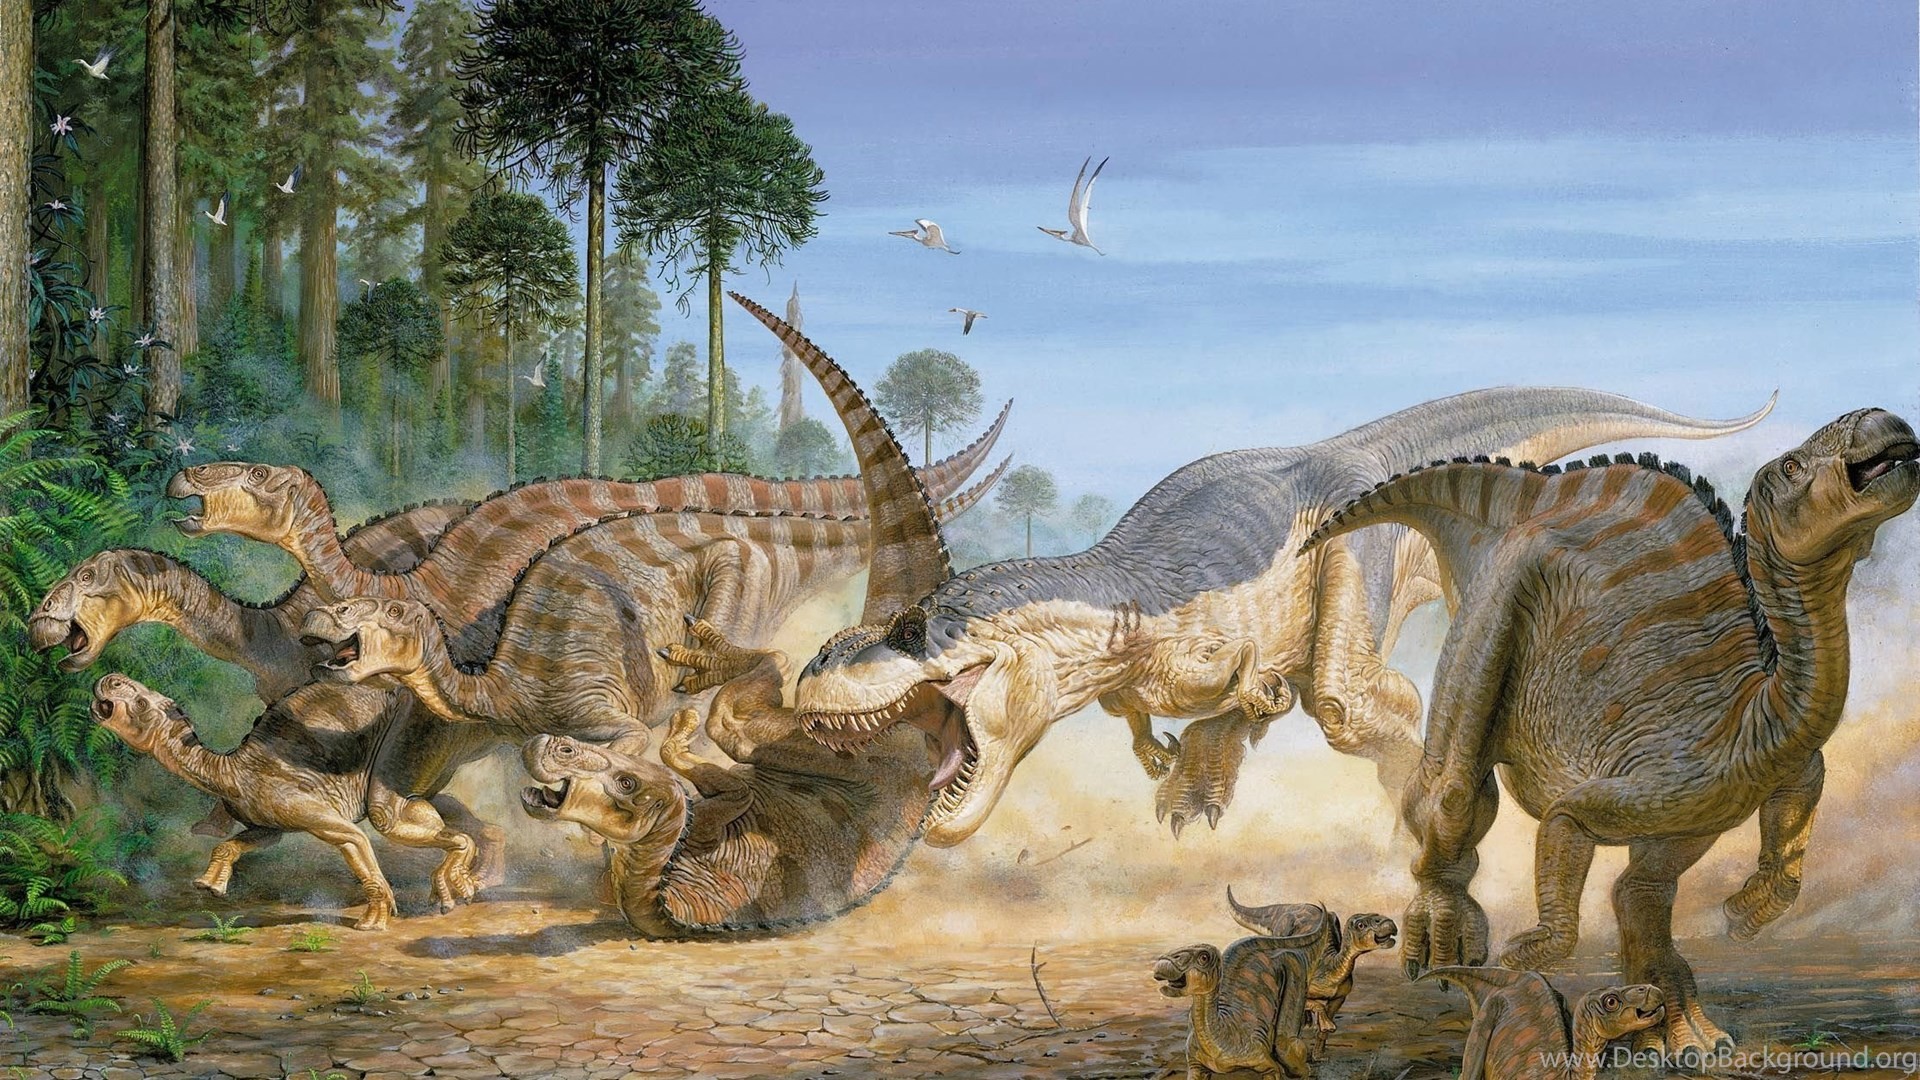 1920x1080 dinosaurs wallpaper Source Â· Dinosaur Wallpapers Desktop Background